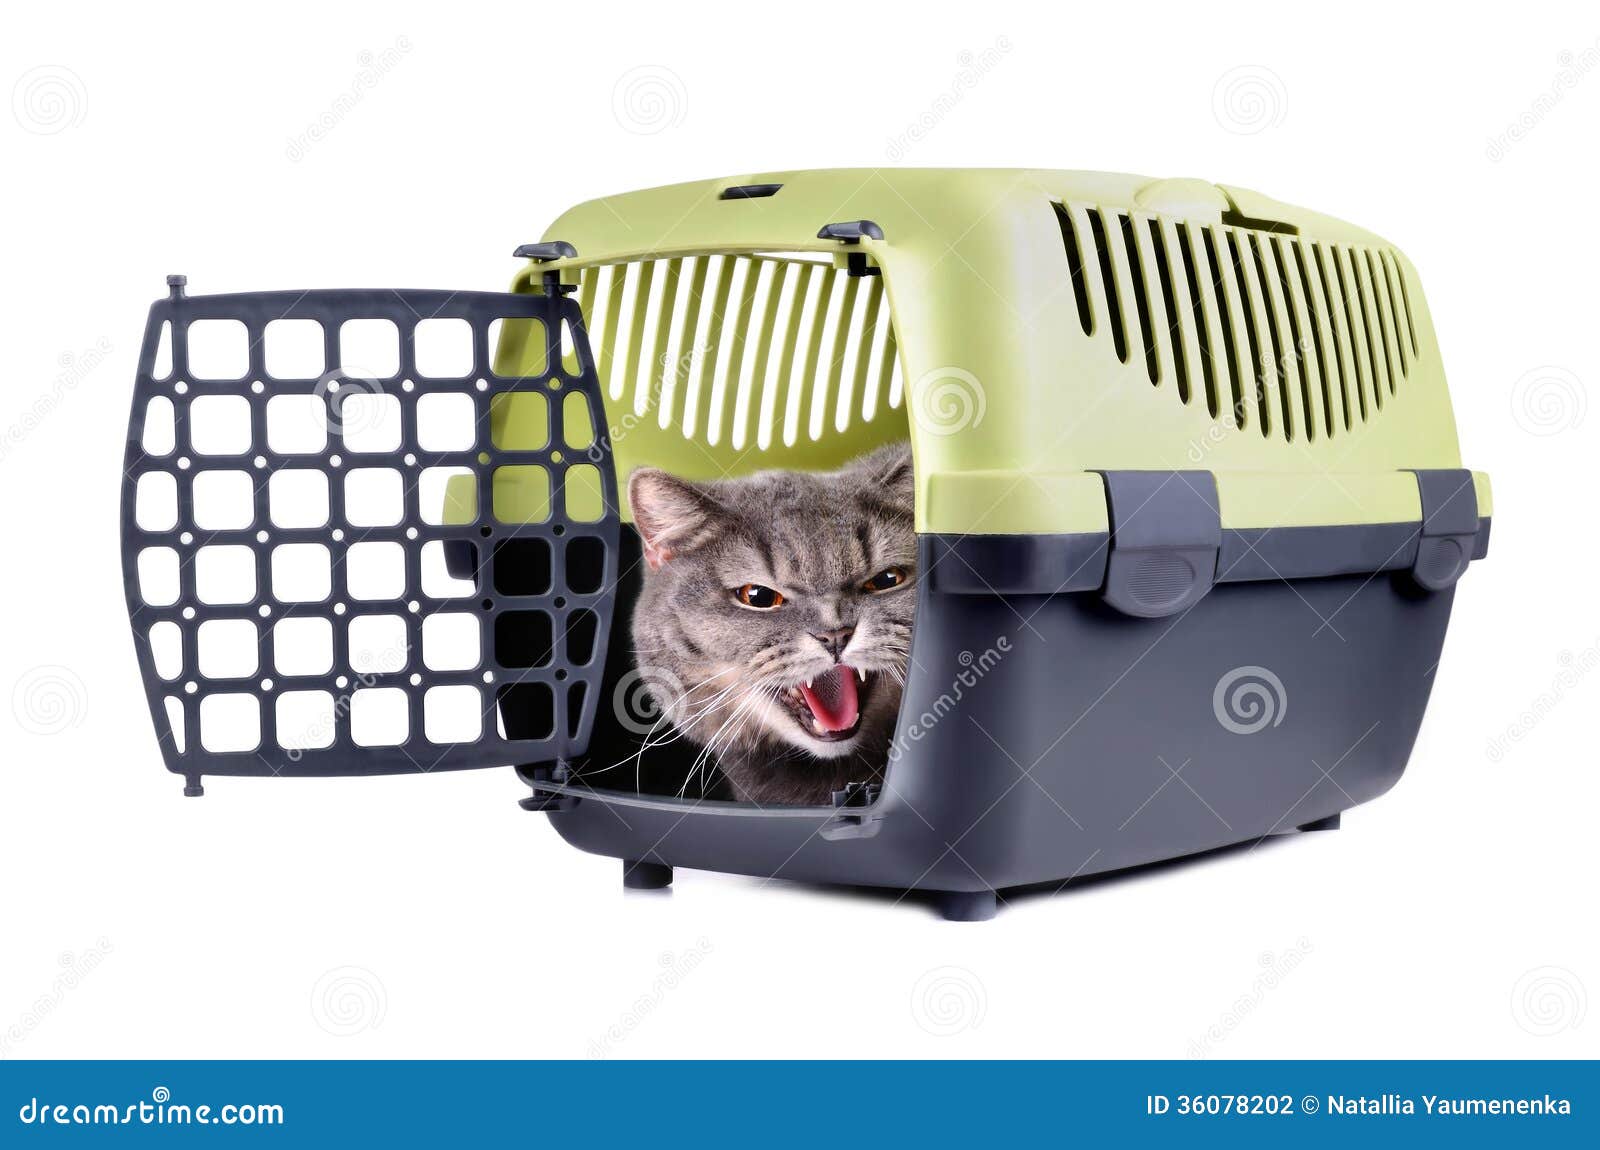 cat carrier clipart - photo #46